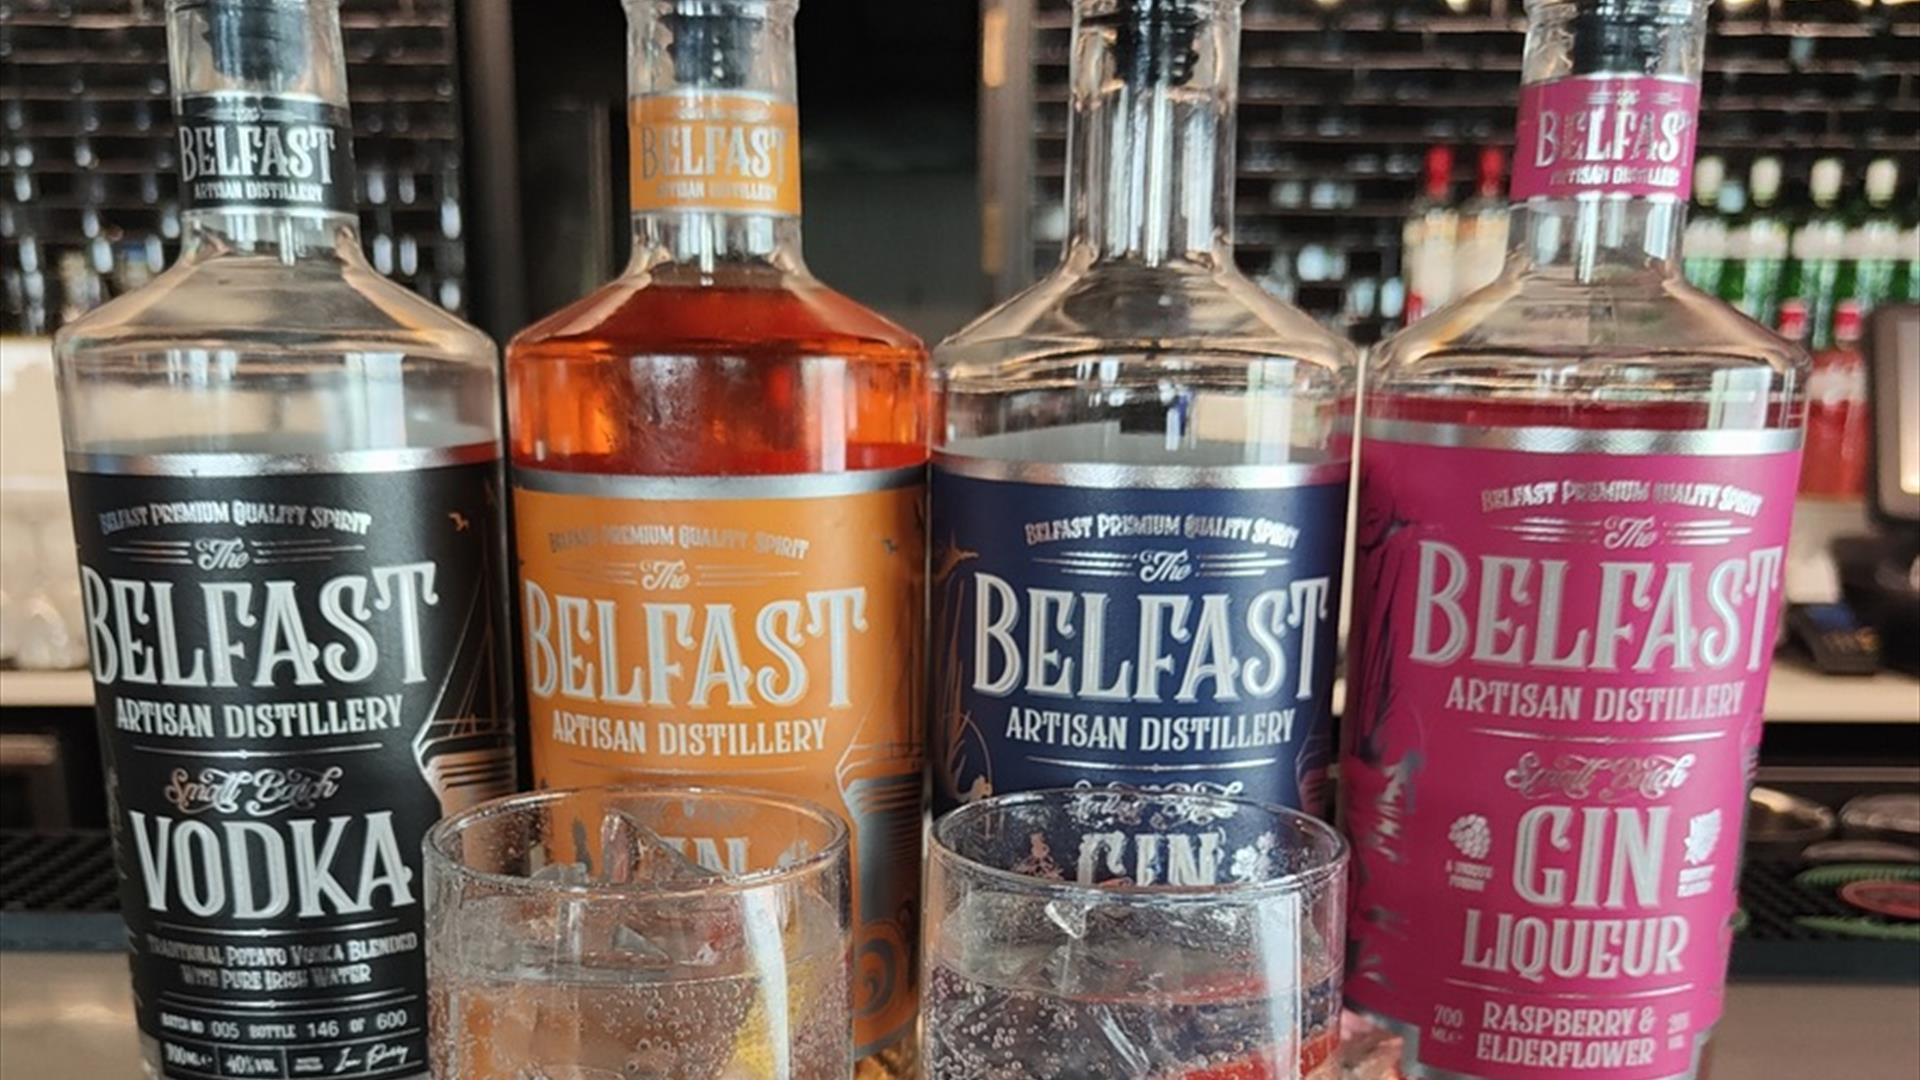 Belfast Artisan Distillery products